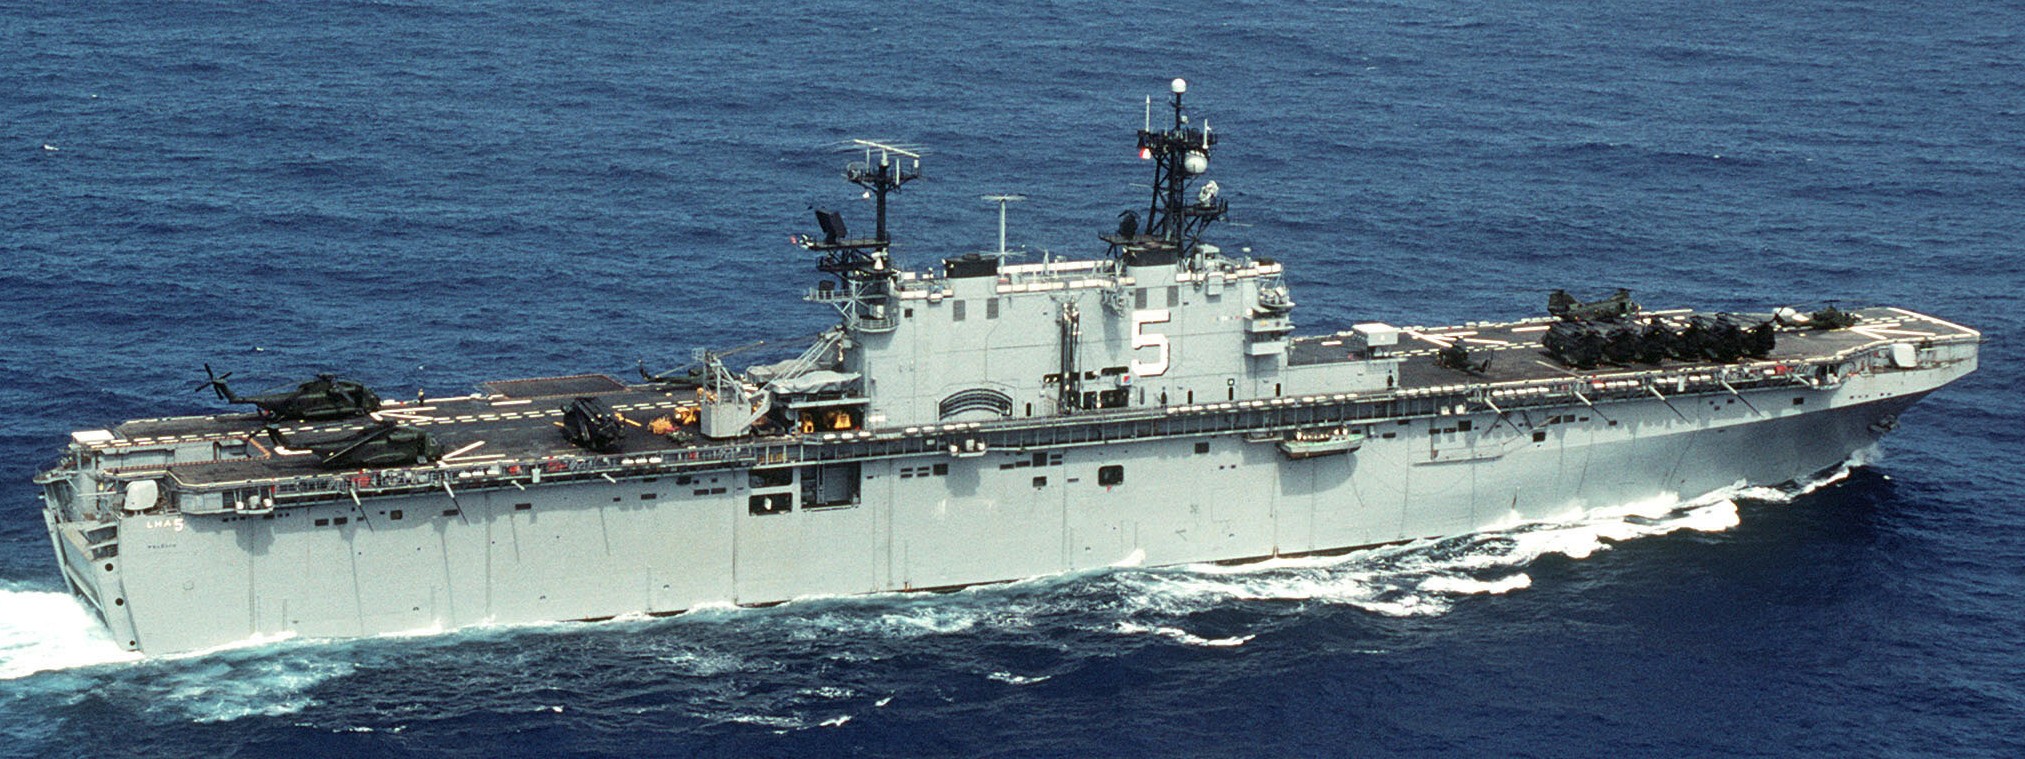 lha-5 uss peleliu tarawa class amphibious assault ship landing helicopter us navy hmm-262(c) marines 140